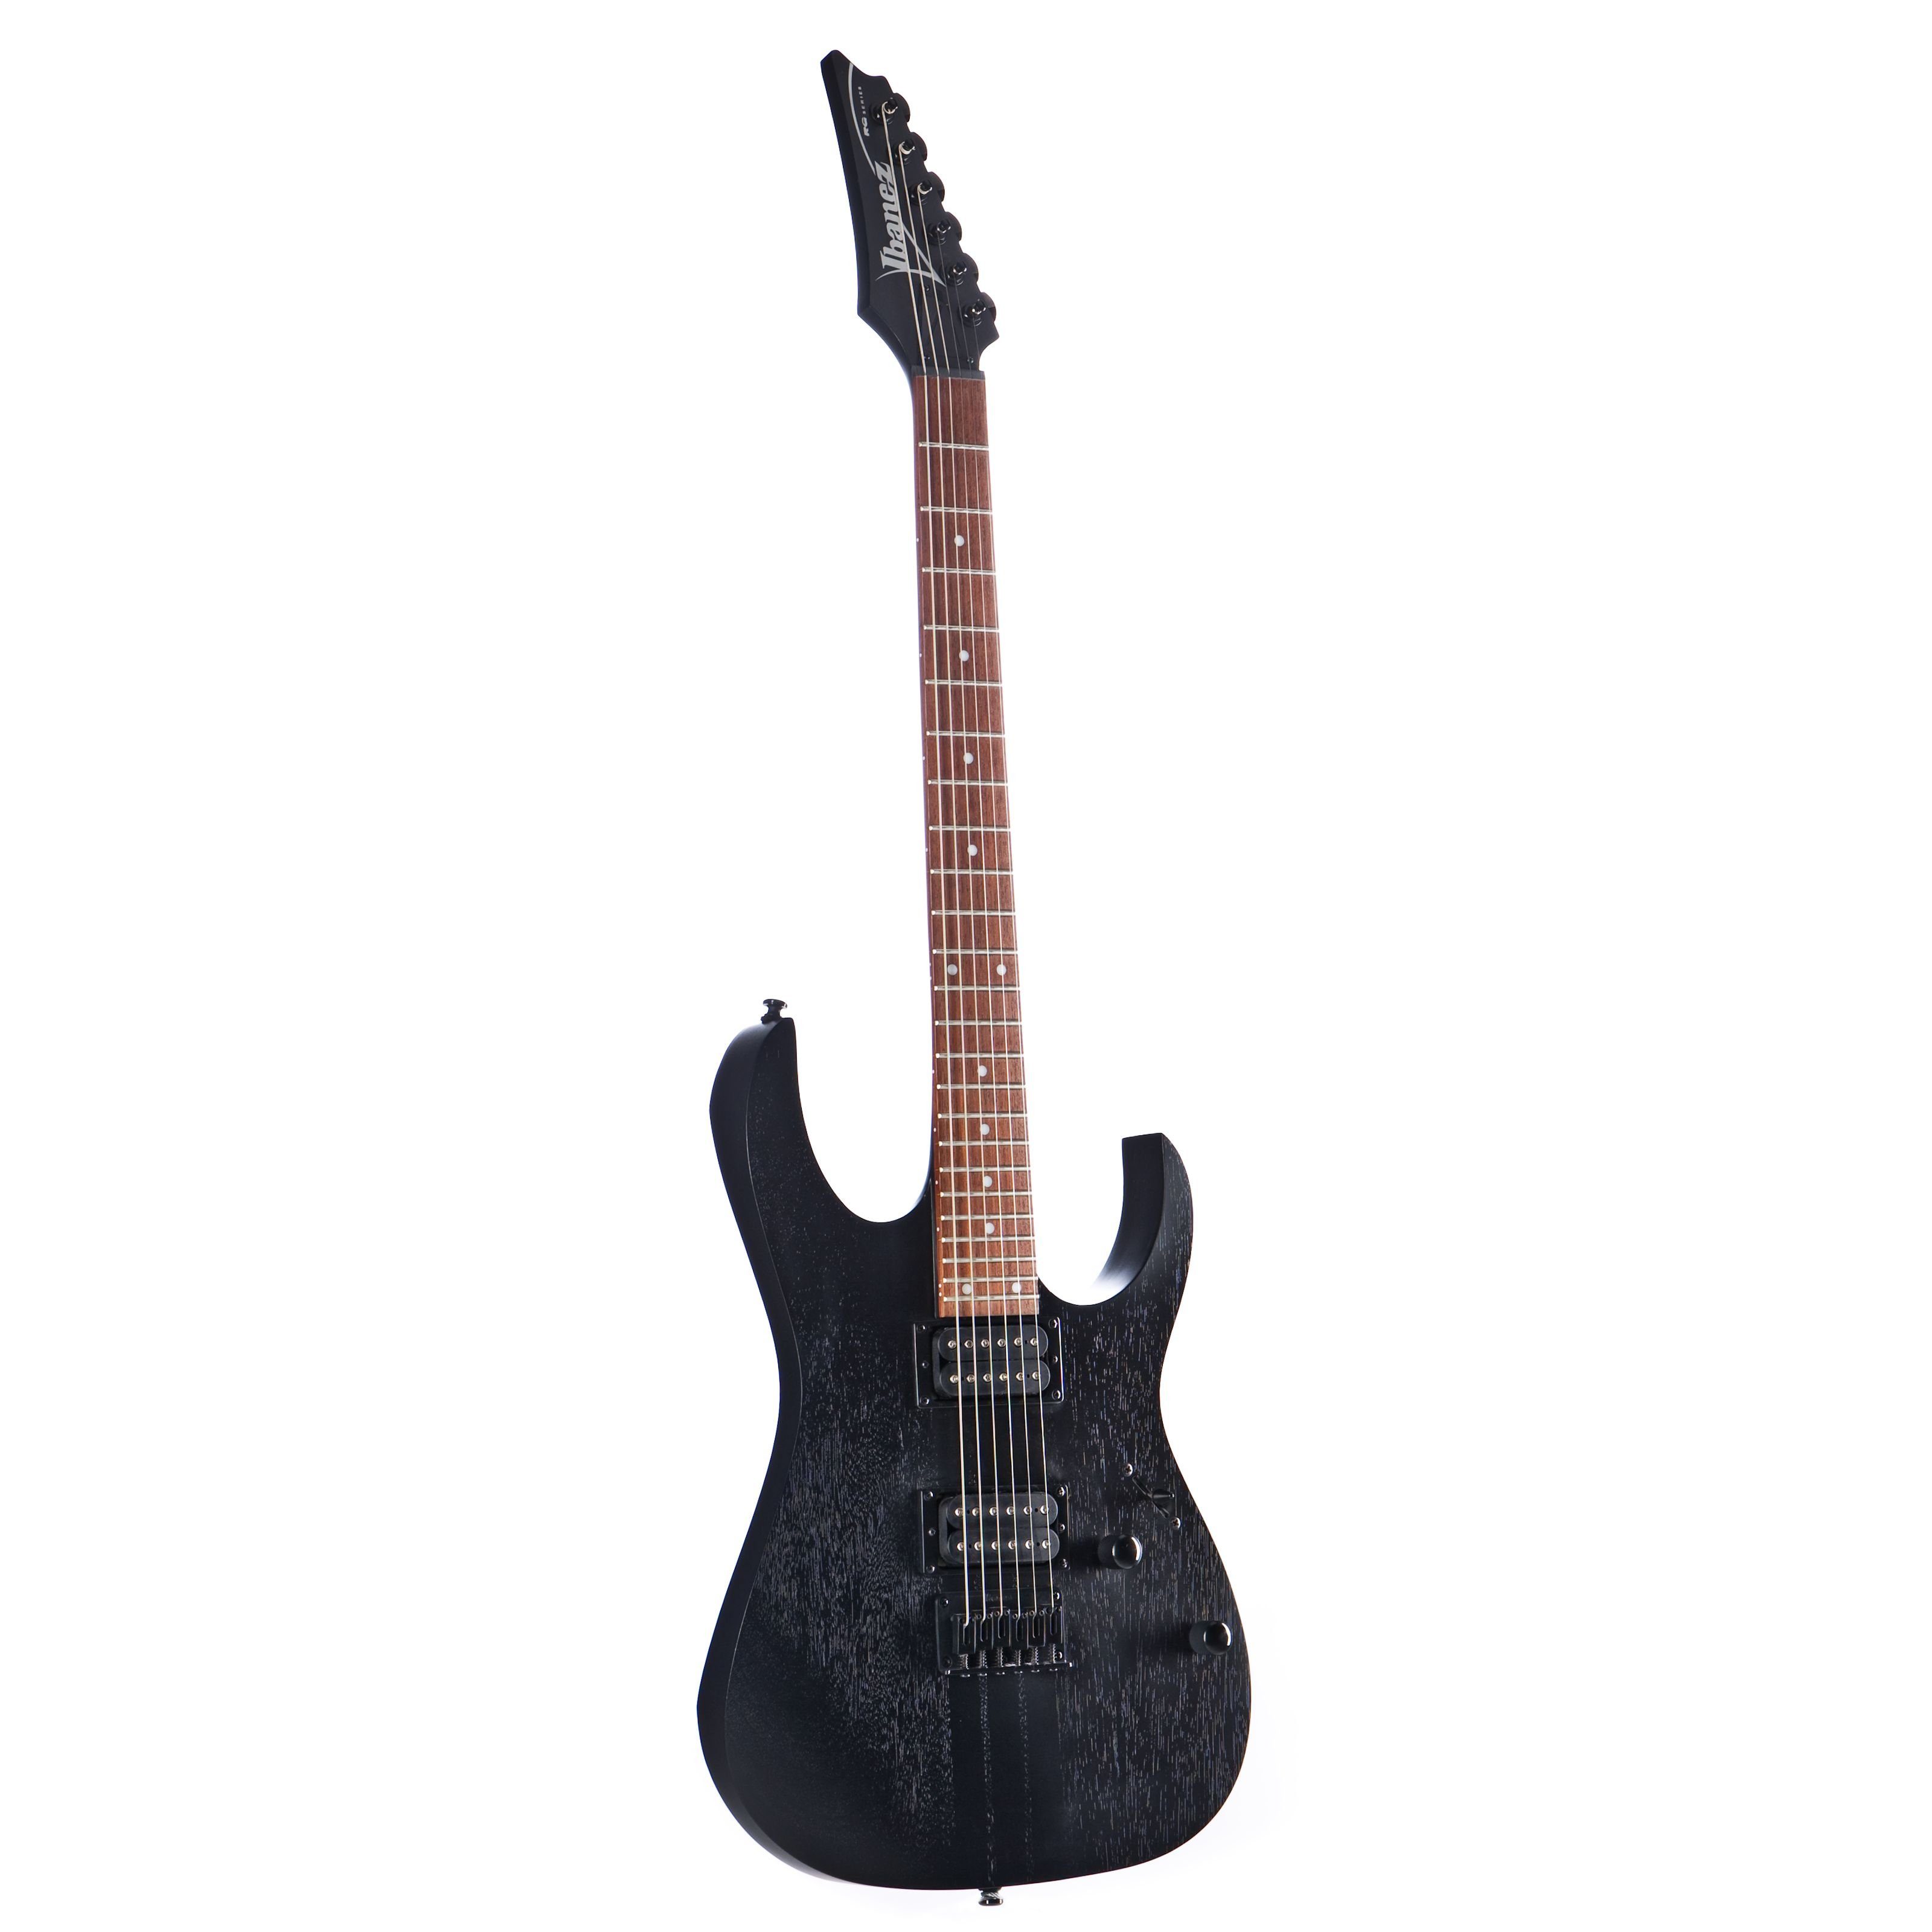 Ibanez E-Gitarre, Standard RGRT421-WK Weathered Black, E-Gitarren, Ibanez Modelle, Standard RGRT421-WK Weathered Black - E-Gitarre